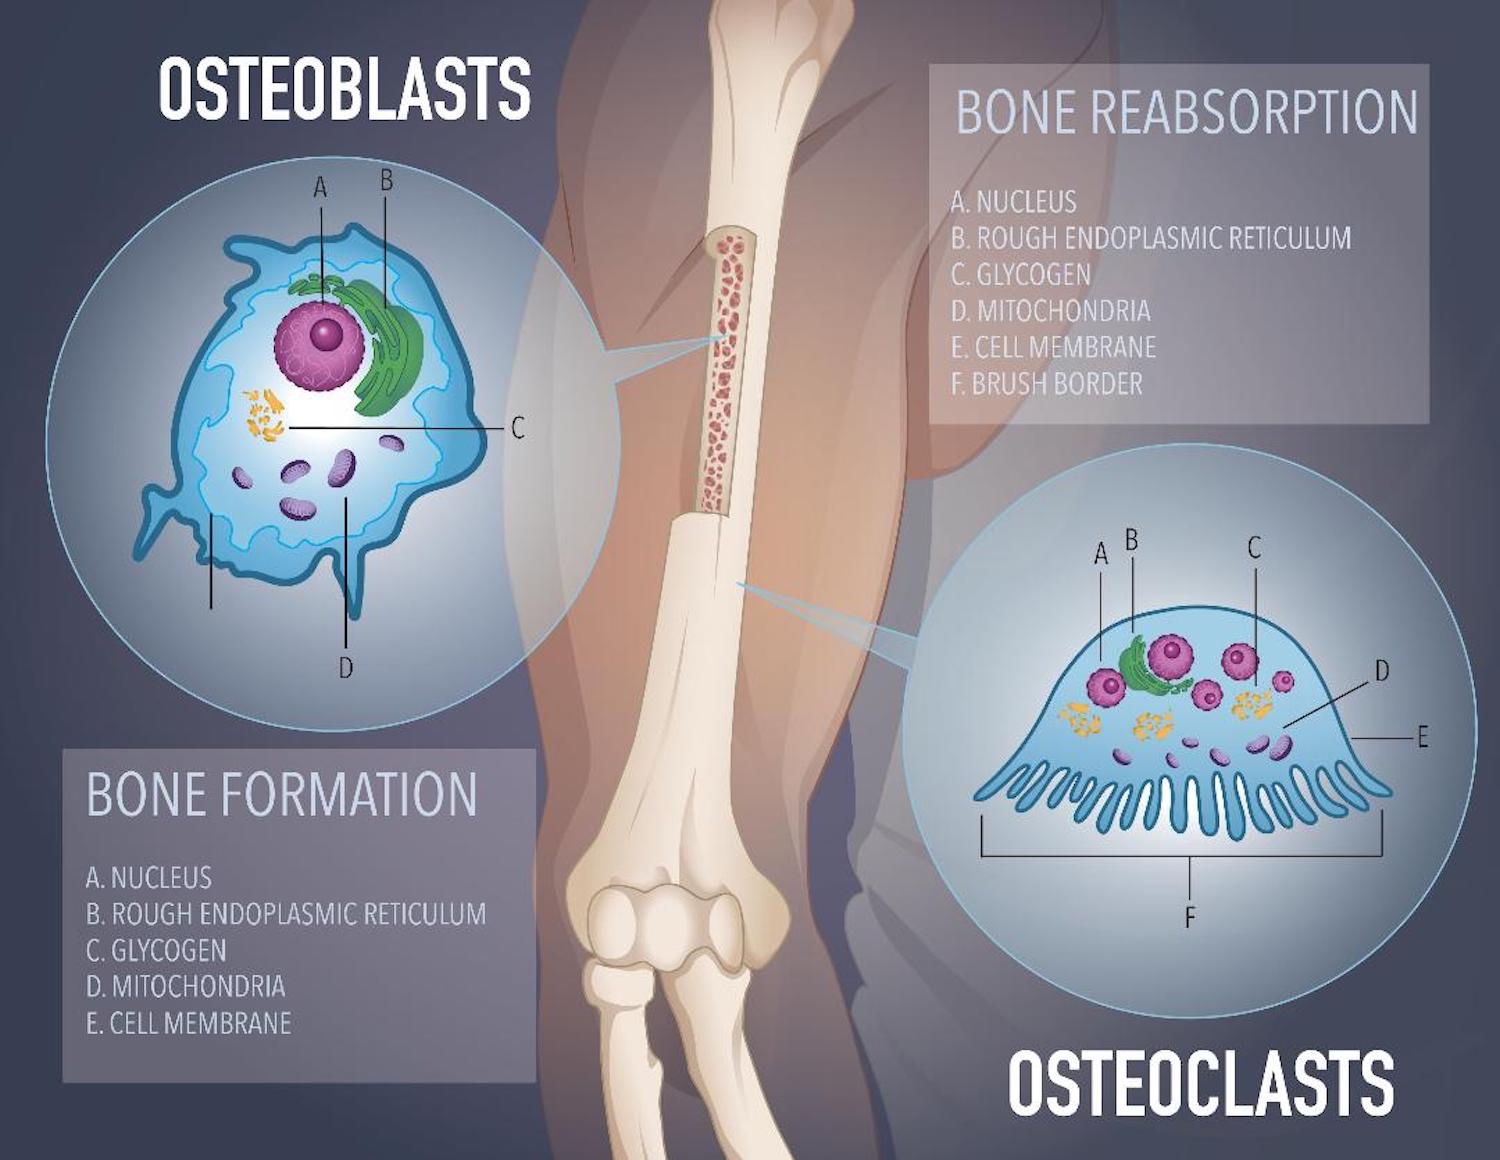 Osteoblasts vs. Osteoclasts